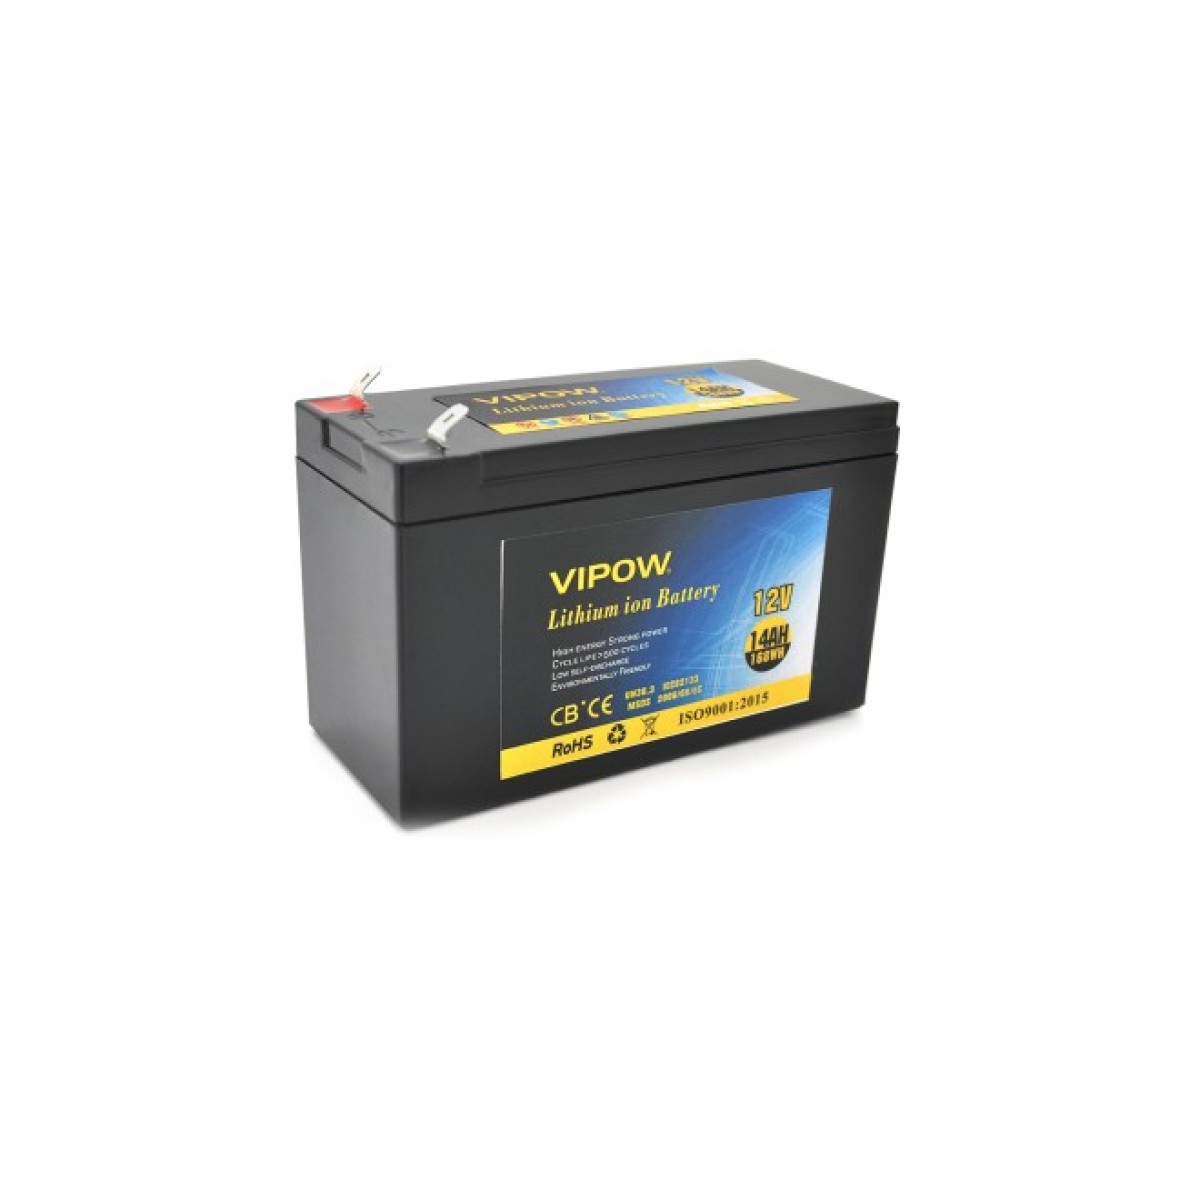 Батарея к ИБП Vipow 12V - 14Ah Li-ion (VP-12140LI) 256_256.jpg